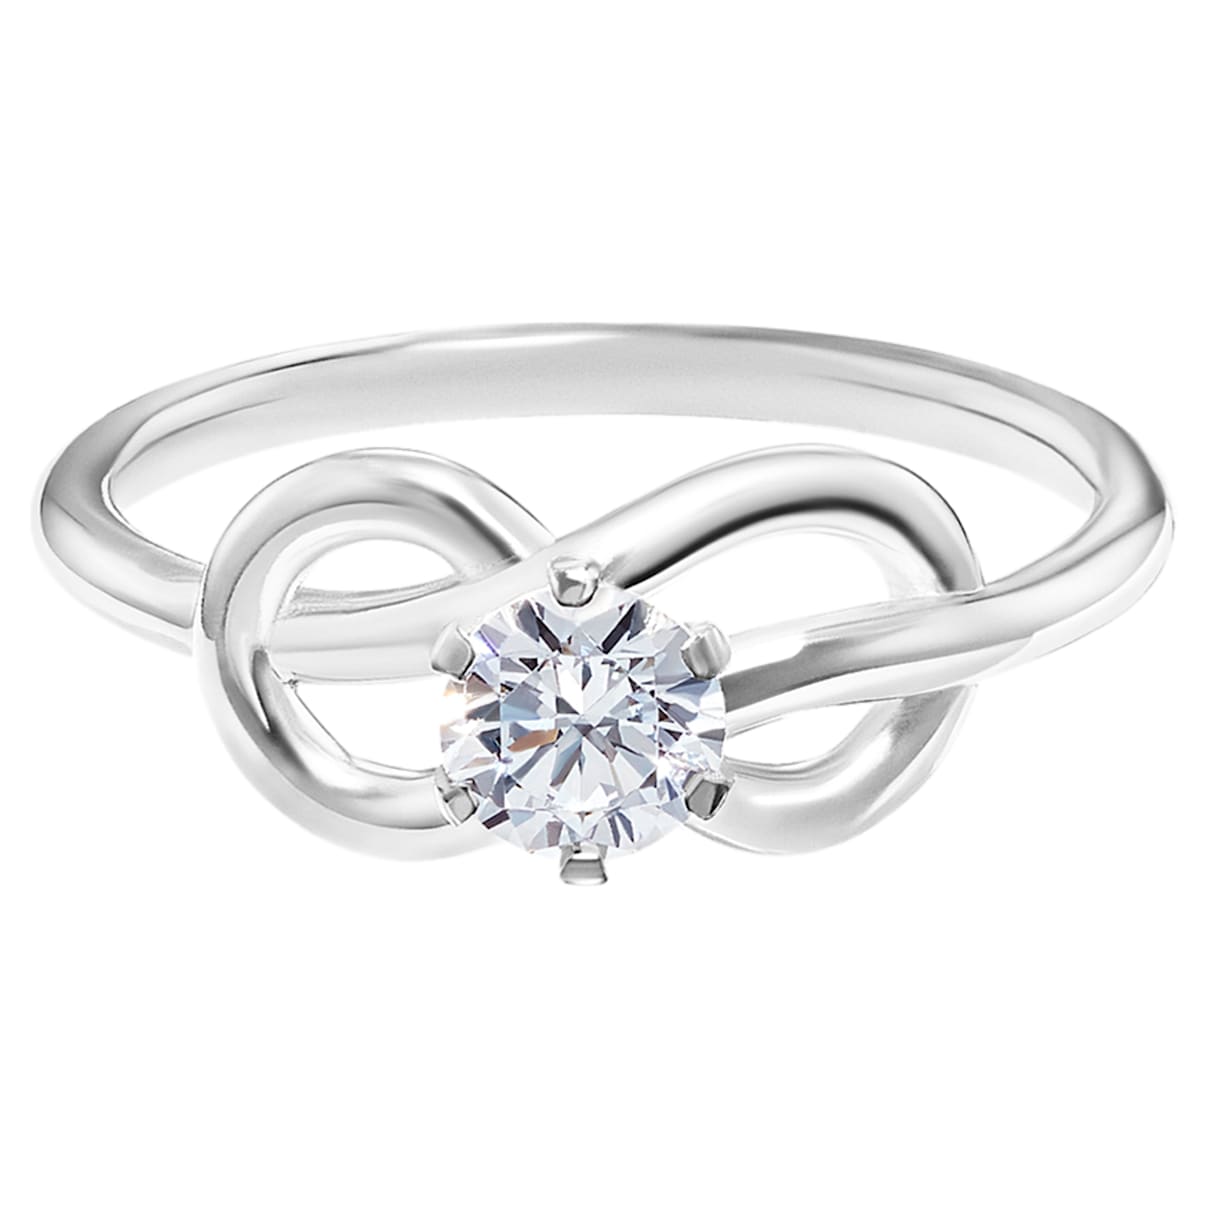 Knot of True Love Savoy Ring 0.75ct, Swarovski Created Diamonds, 18K White Gold, Size 52